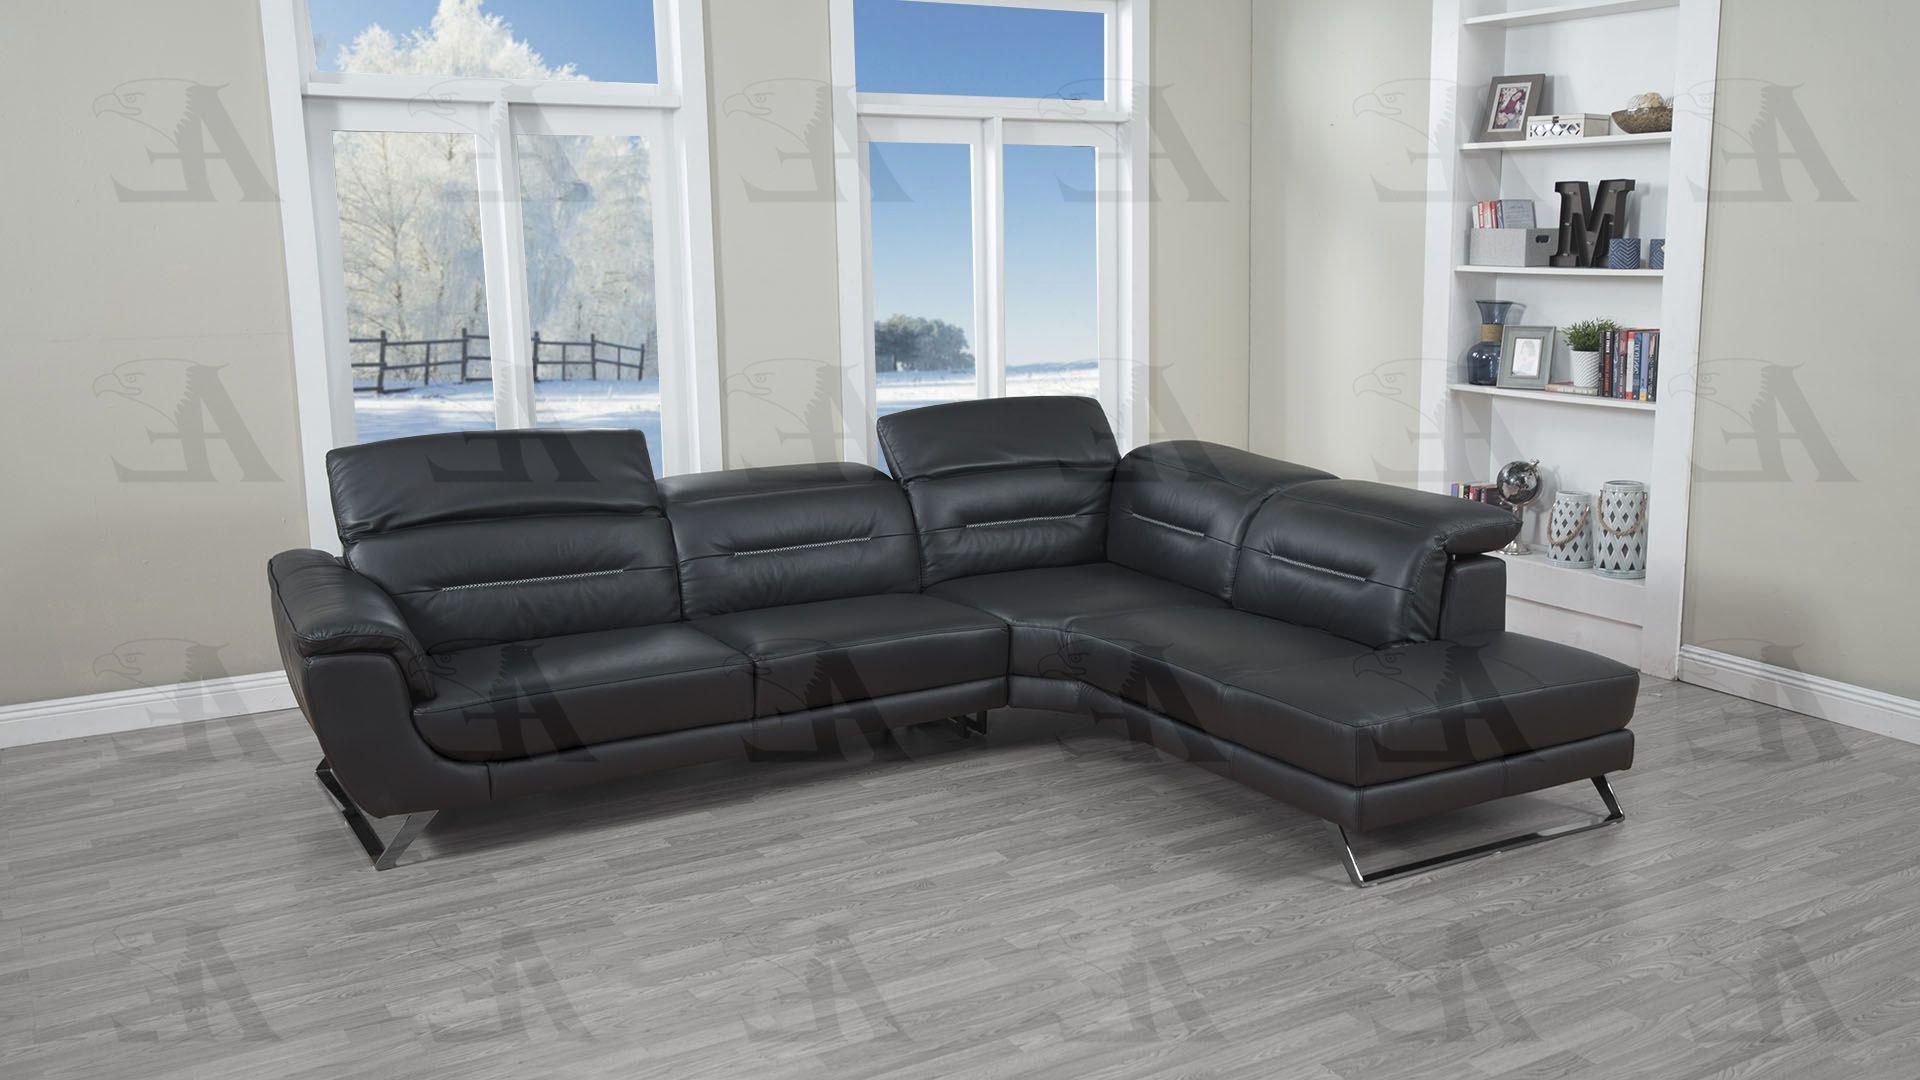 

    
American Eagle Furniture EK-LH756-BK Sectional Sofa Black EK-LH756-BK
